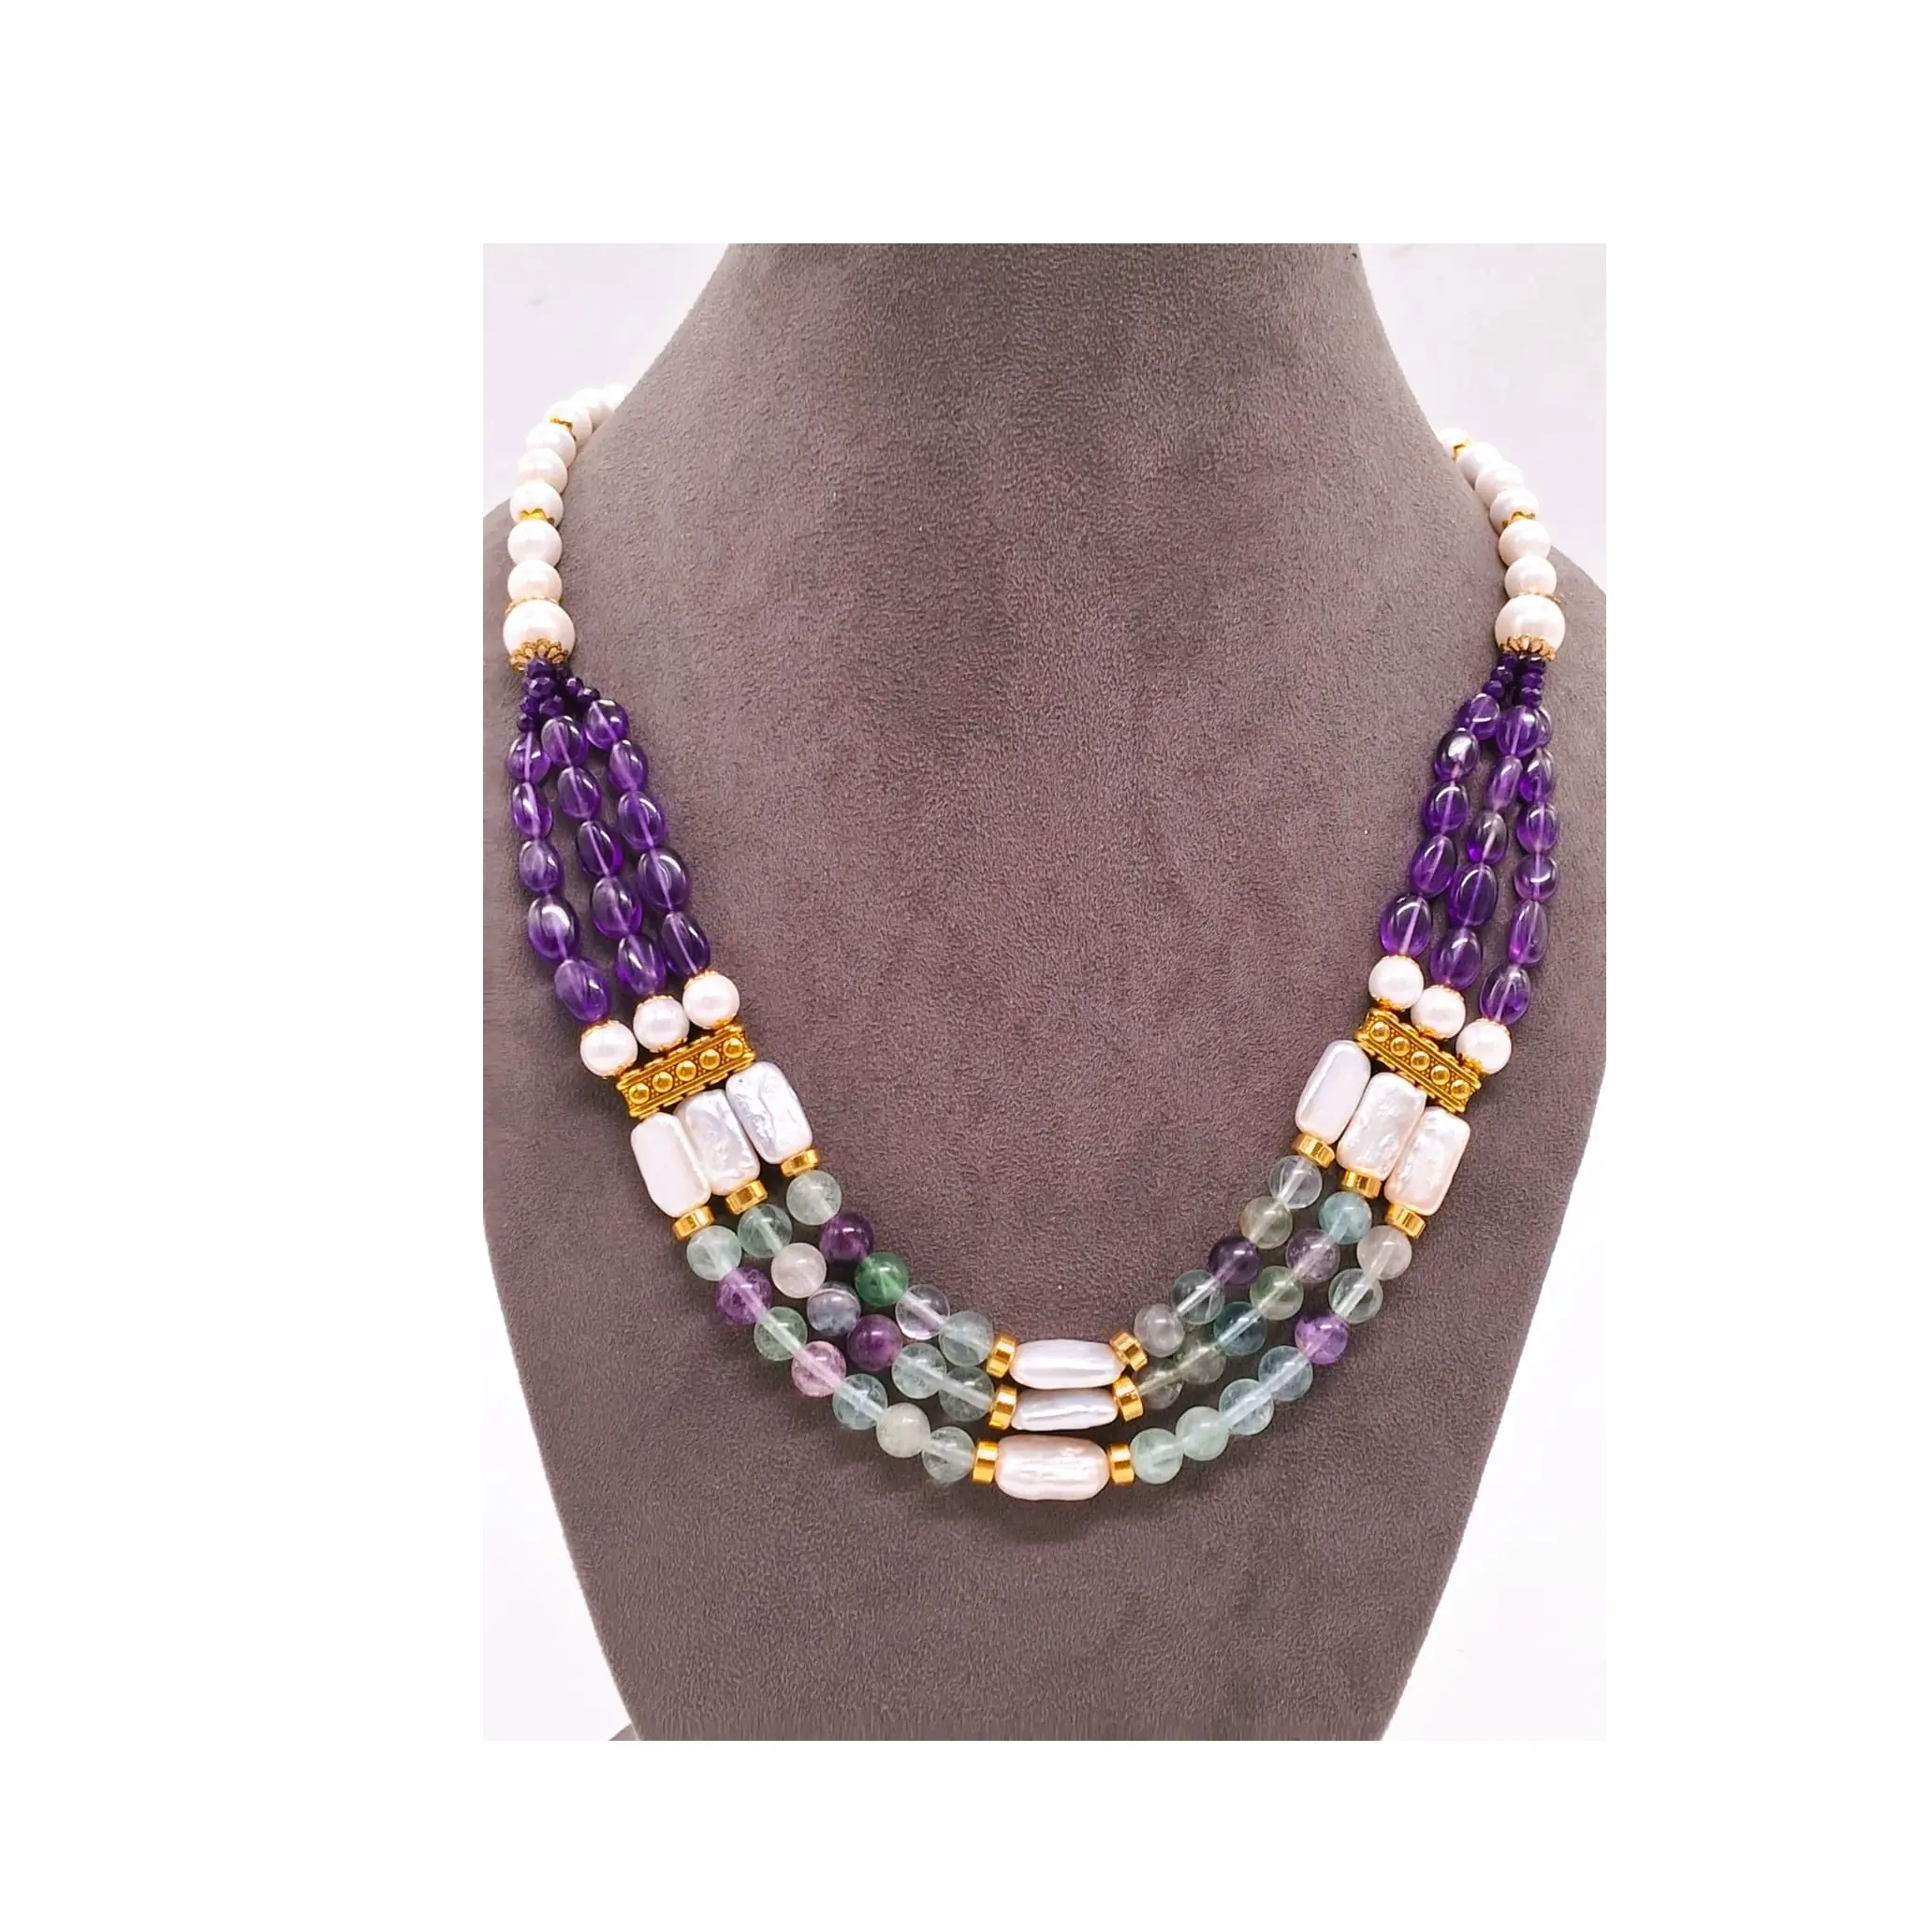 Kalung batu alam mutiara fluorit Mint Amethyst kualitas ekspor dengan tampilan elegan kalung perhiasan modis untuk wanita